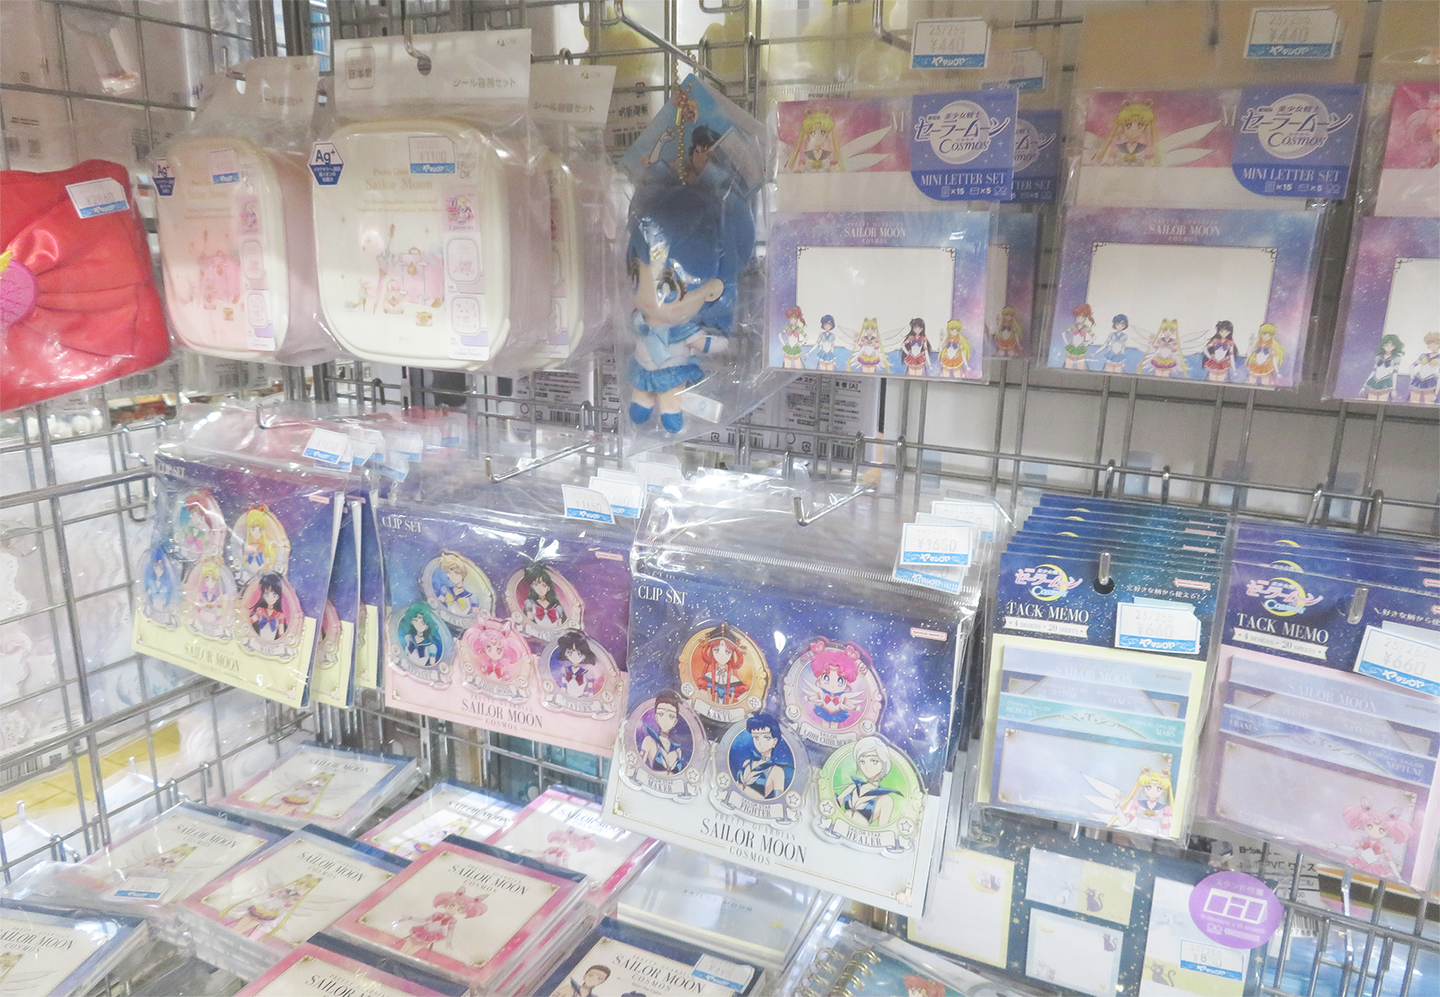 Images of Sailor moon merchandise sold at YAMASHIROYA3